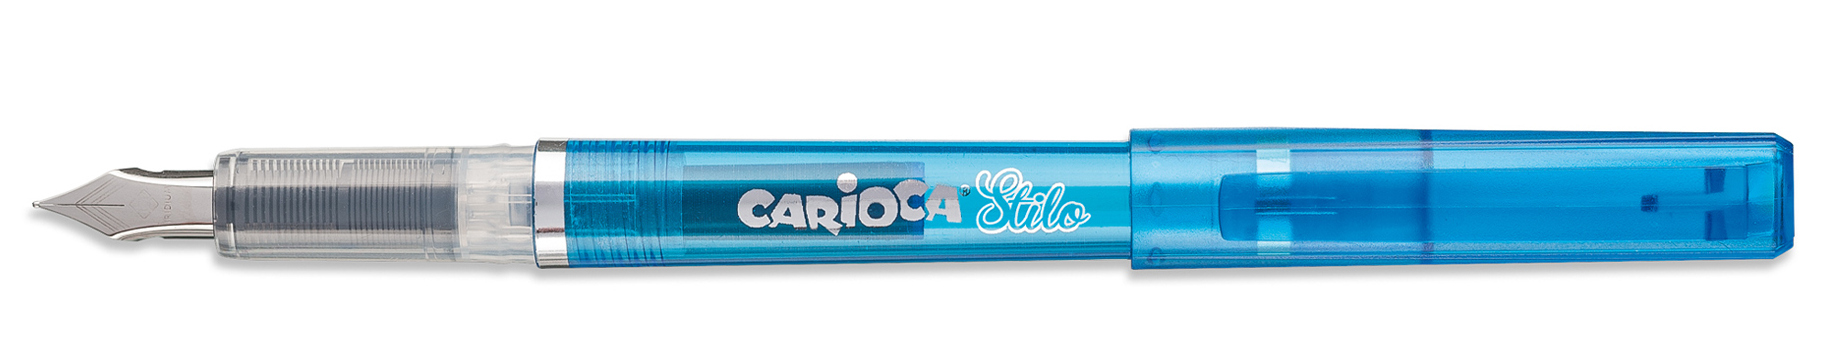 Acheter Carioca OOPS Stylo à bille effaçable Bleu Carioca 31036/02